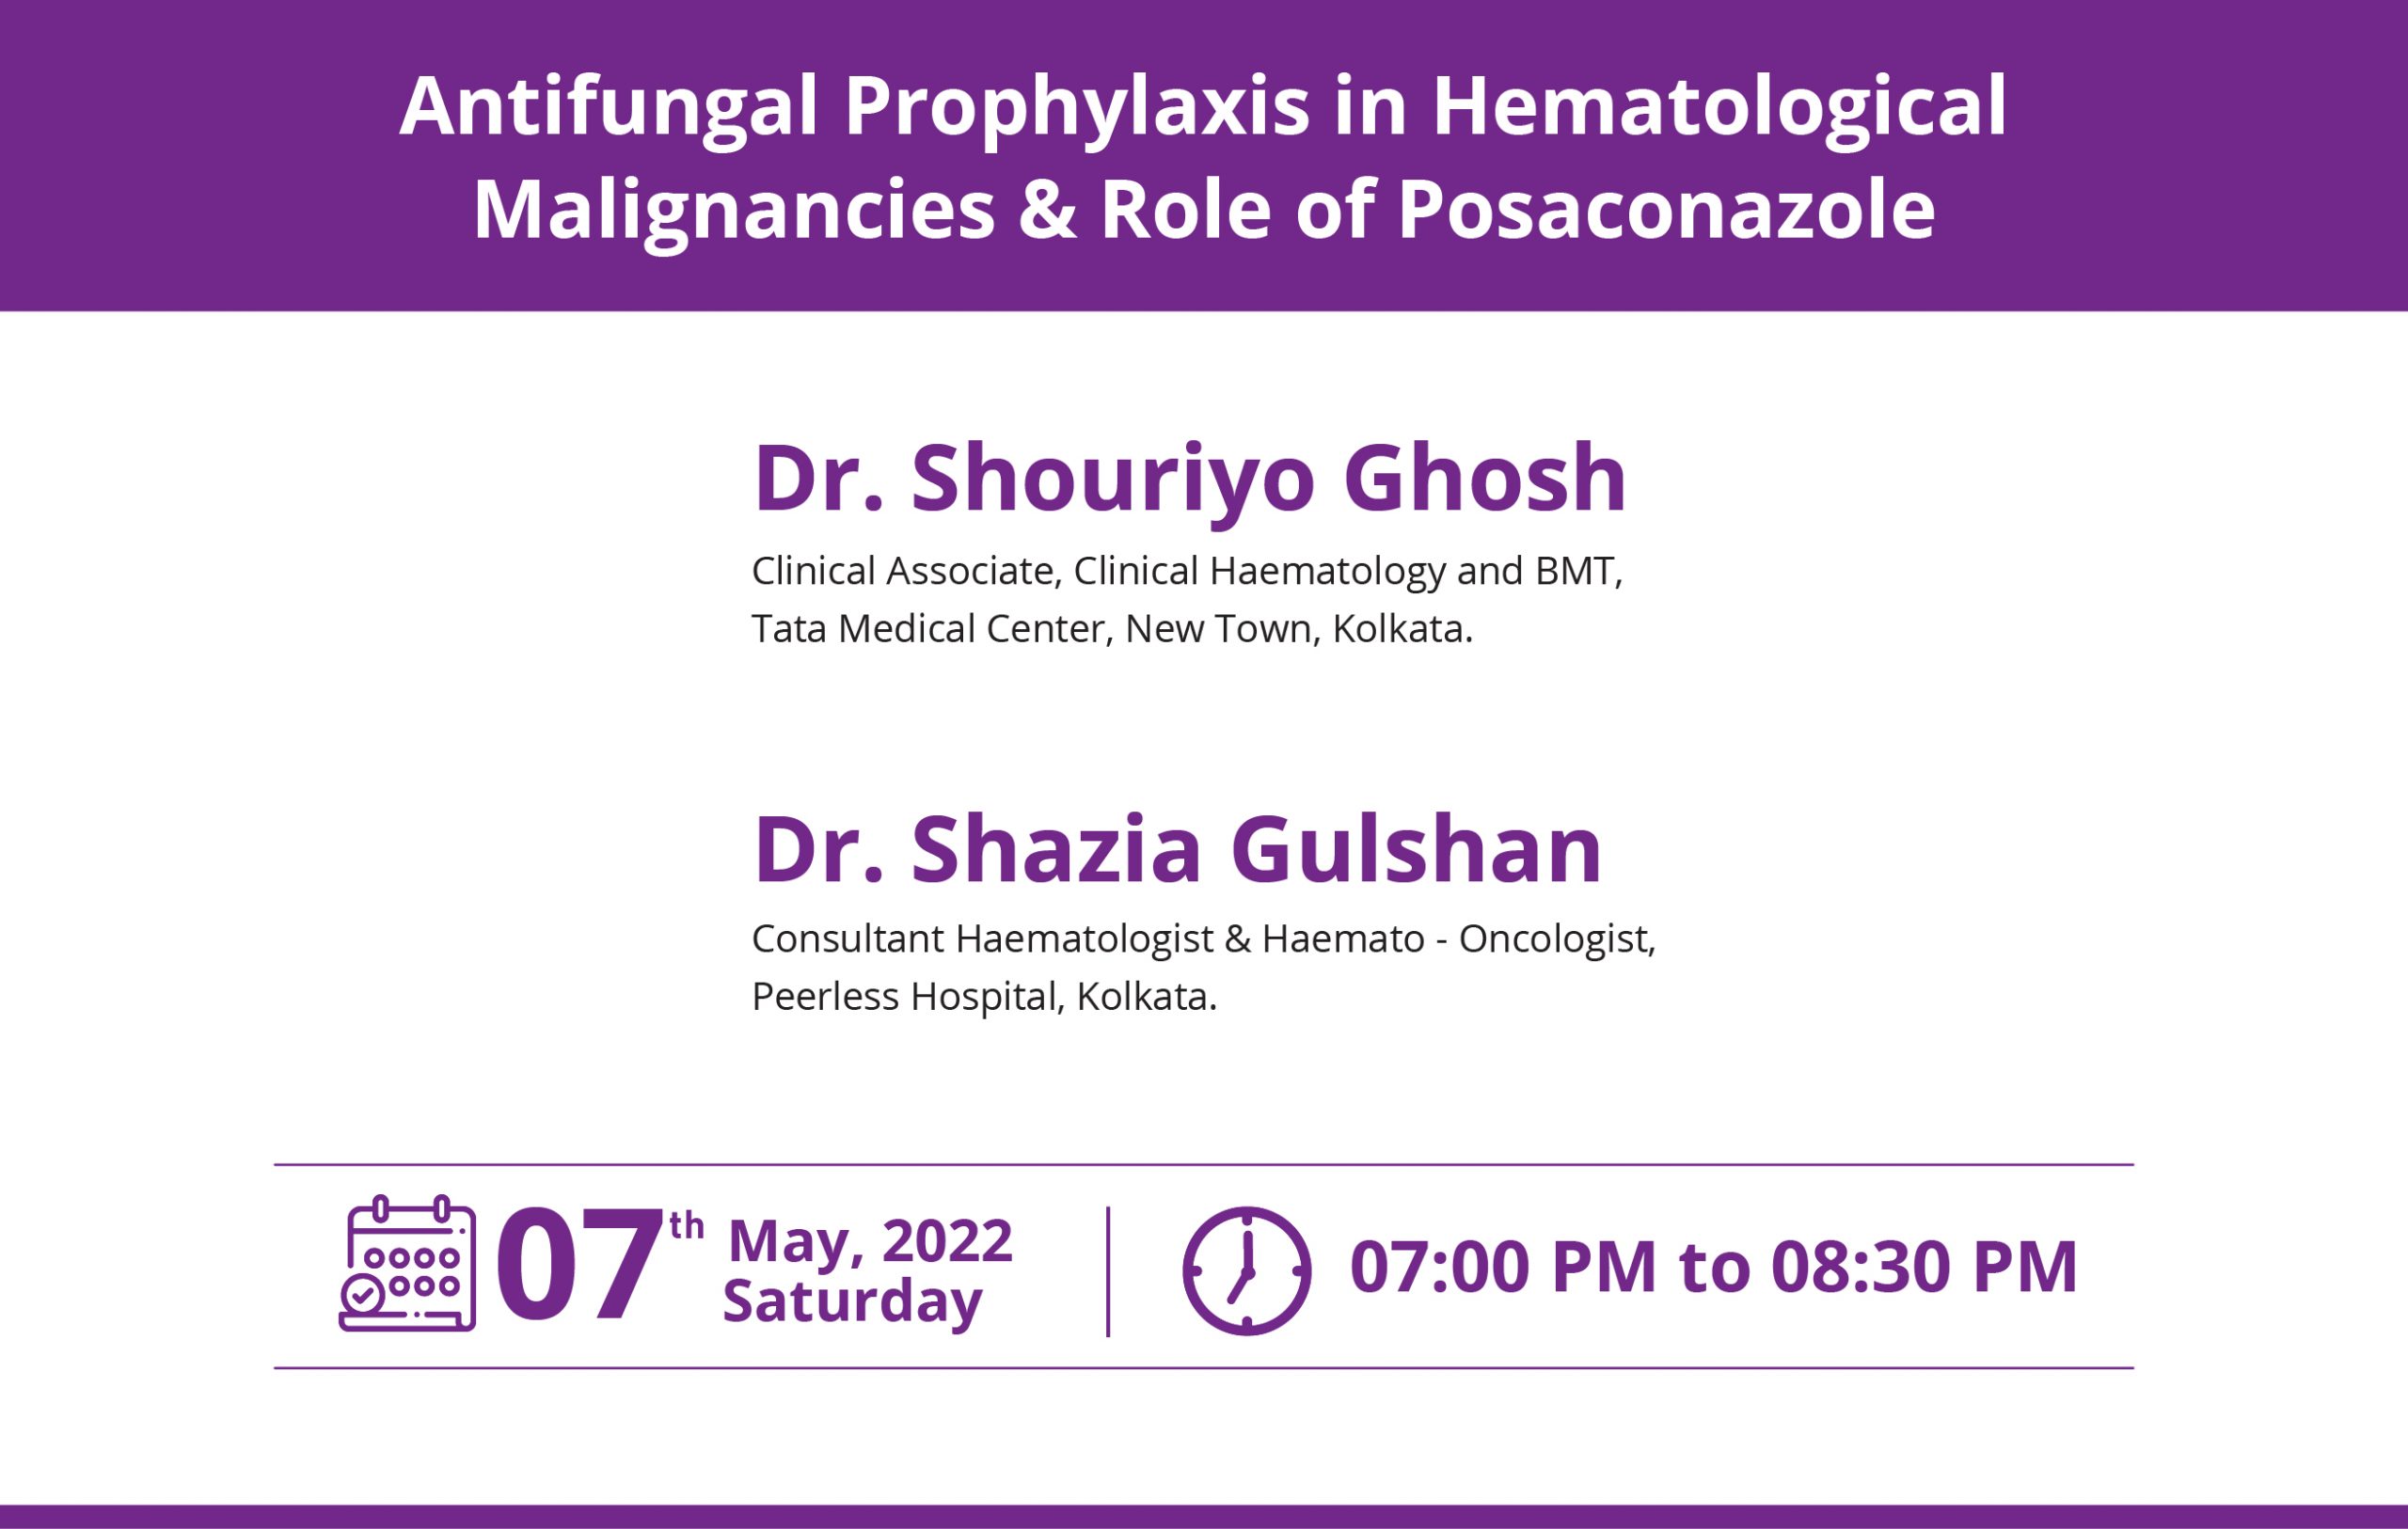 Antifungal Prophylaxis in Hematological Malignancies & Role of Posaconazole